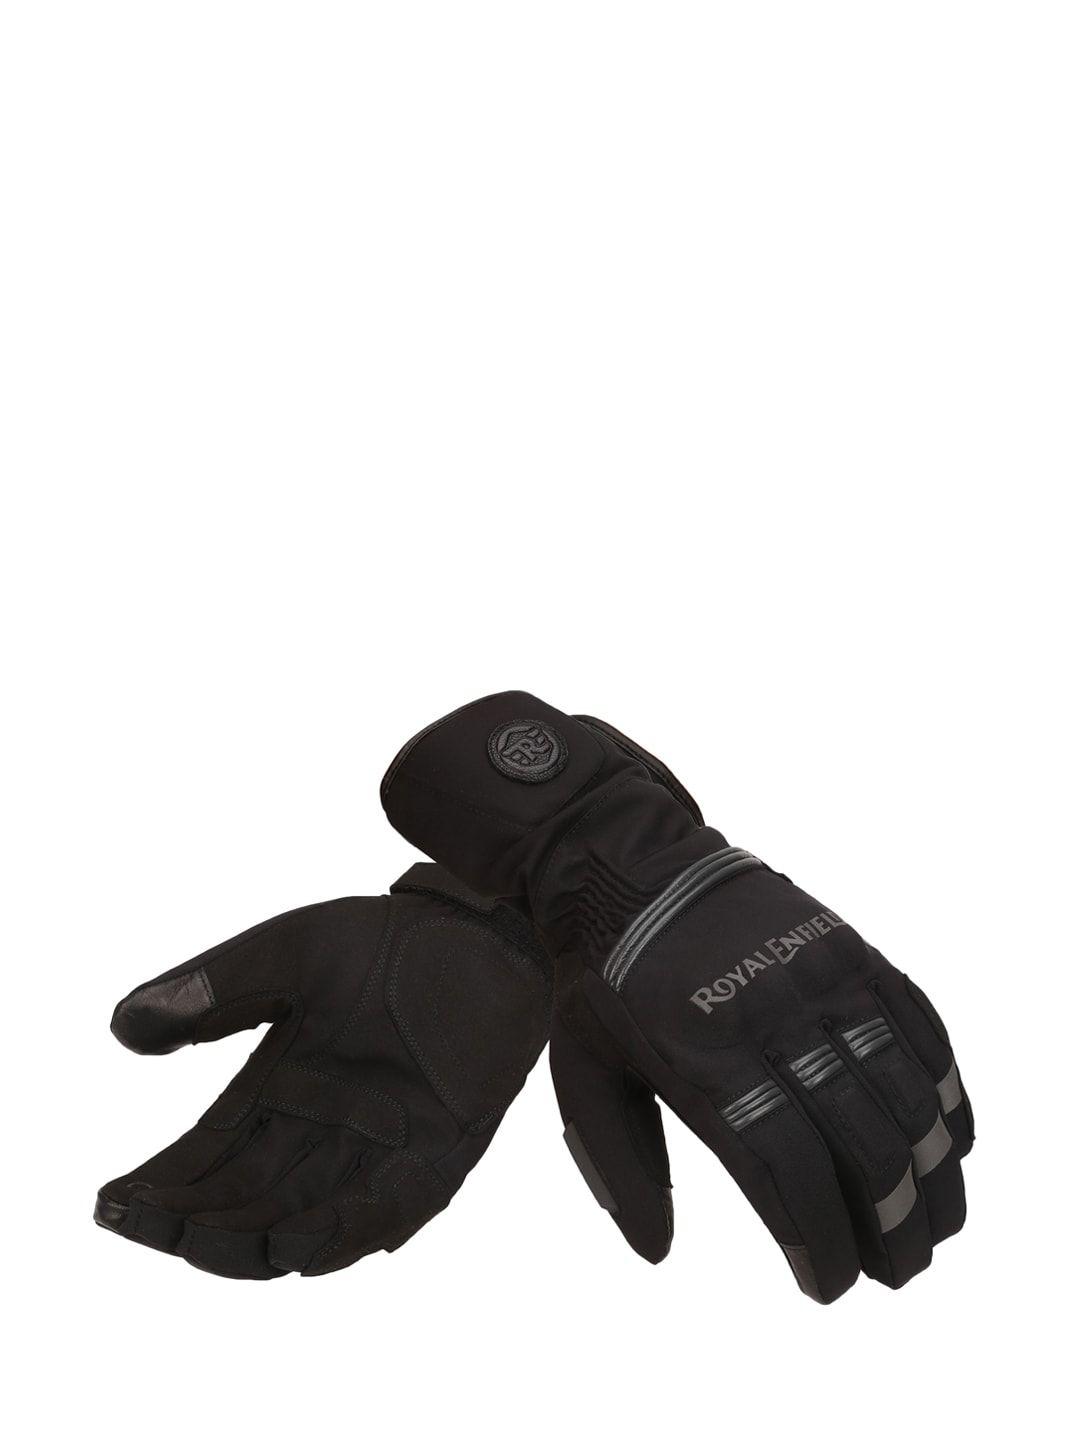 royal-enfield-men-black-&-grey-leather-blizzard-riding-gloves